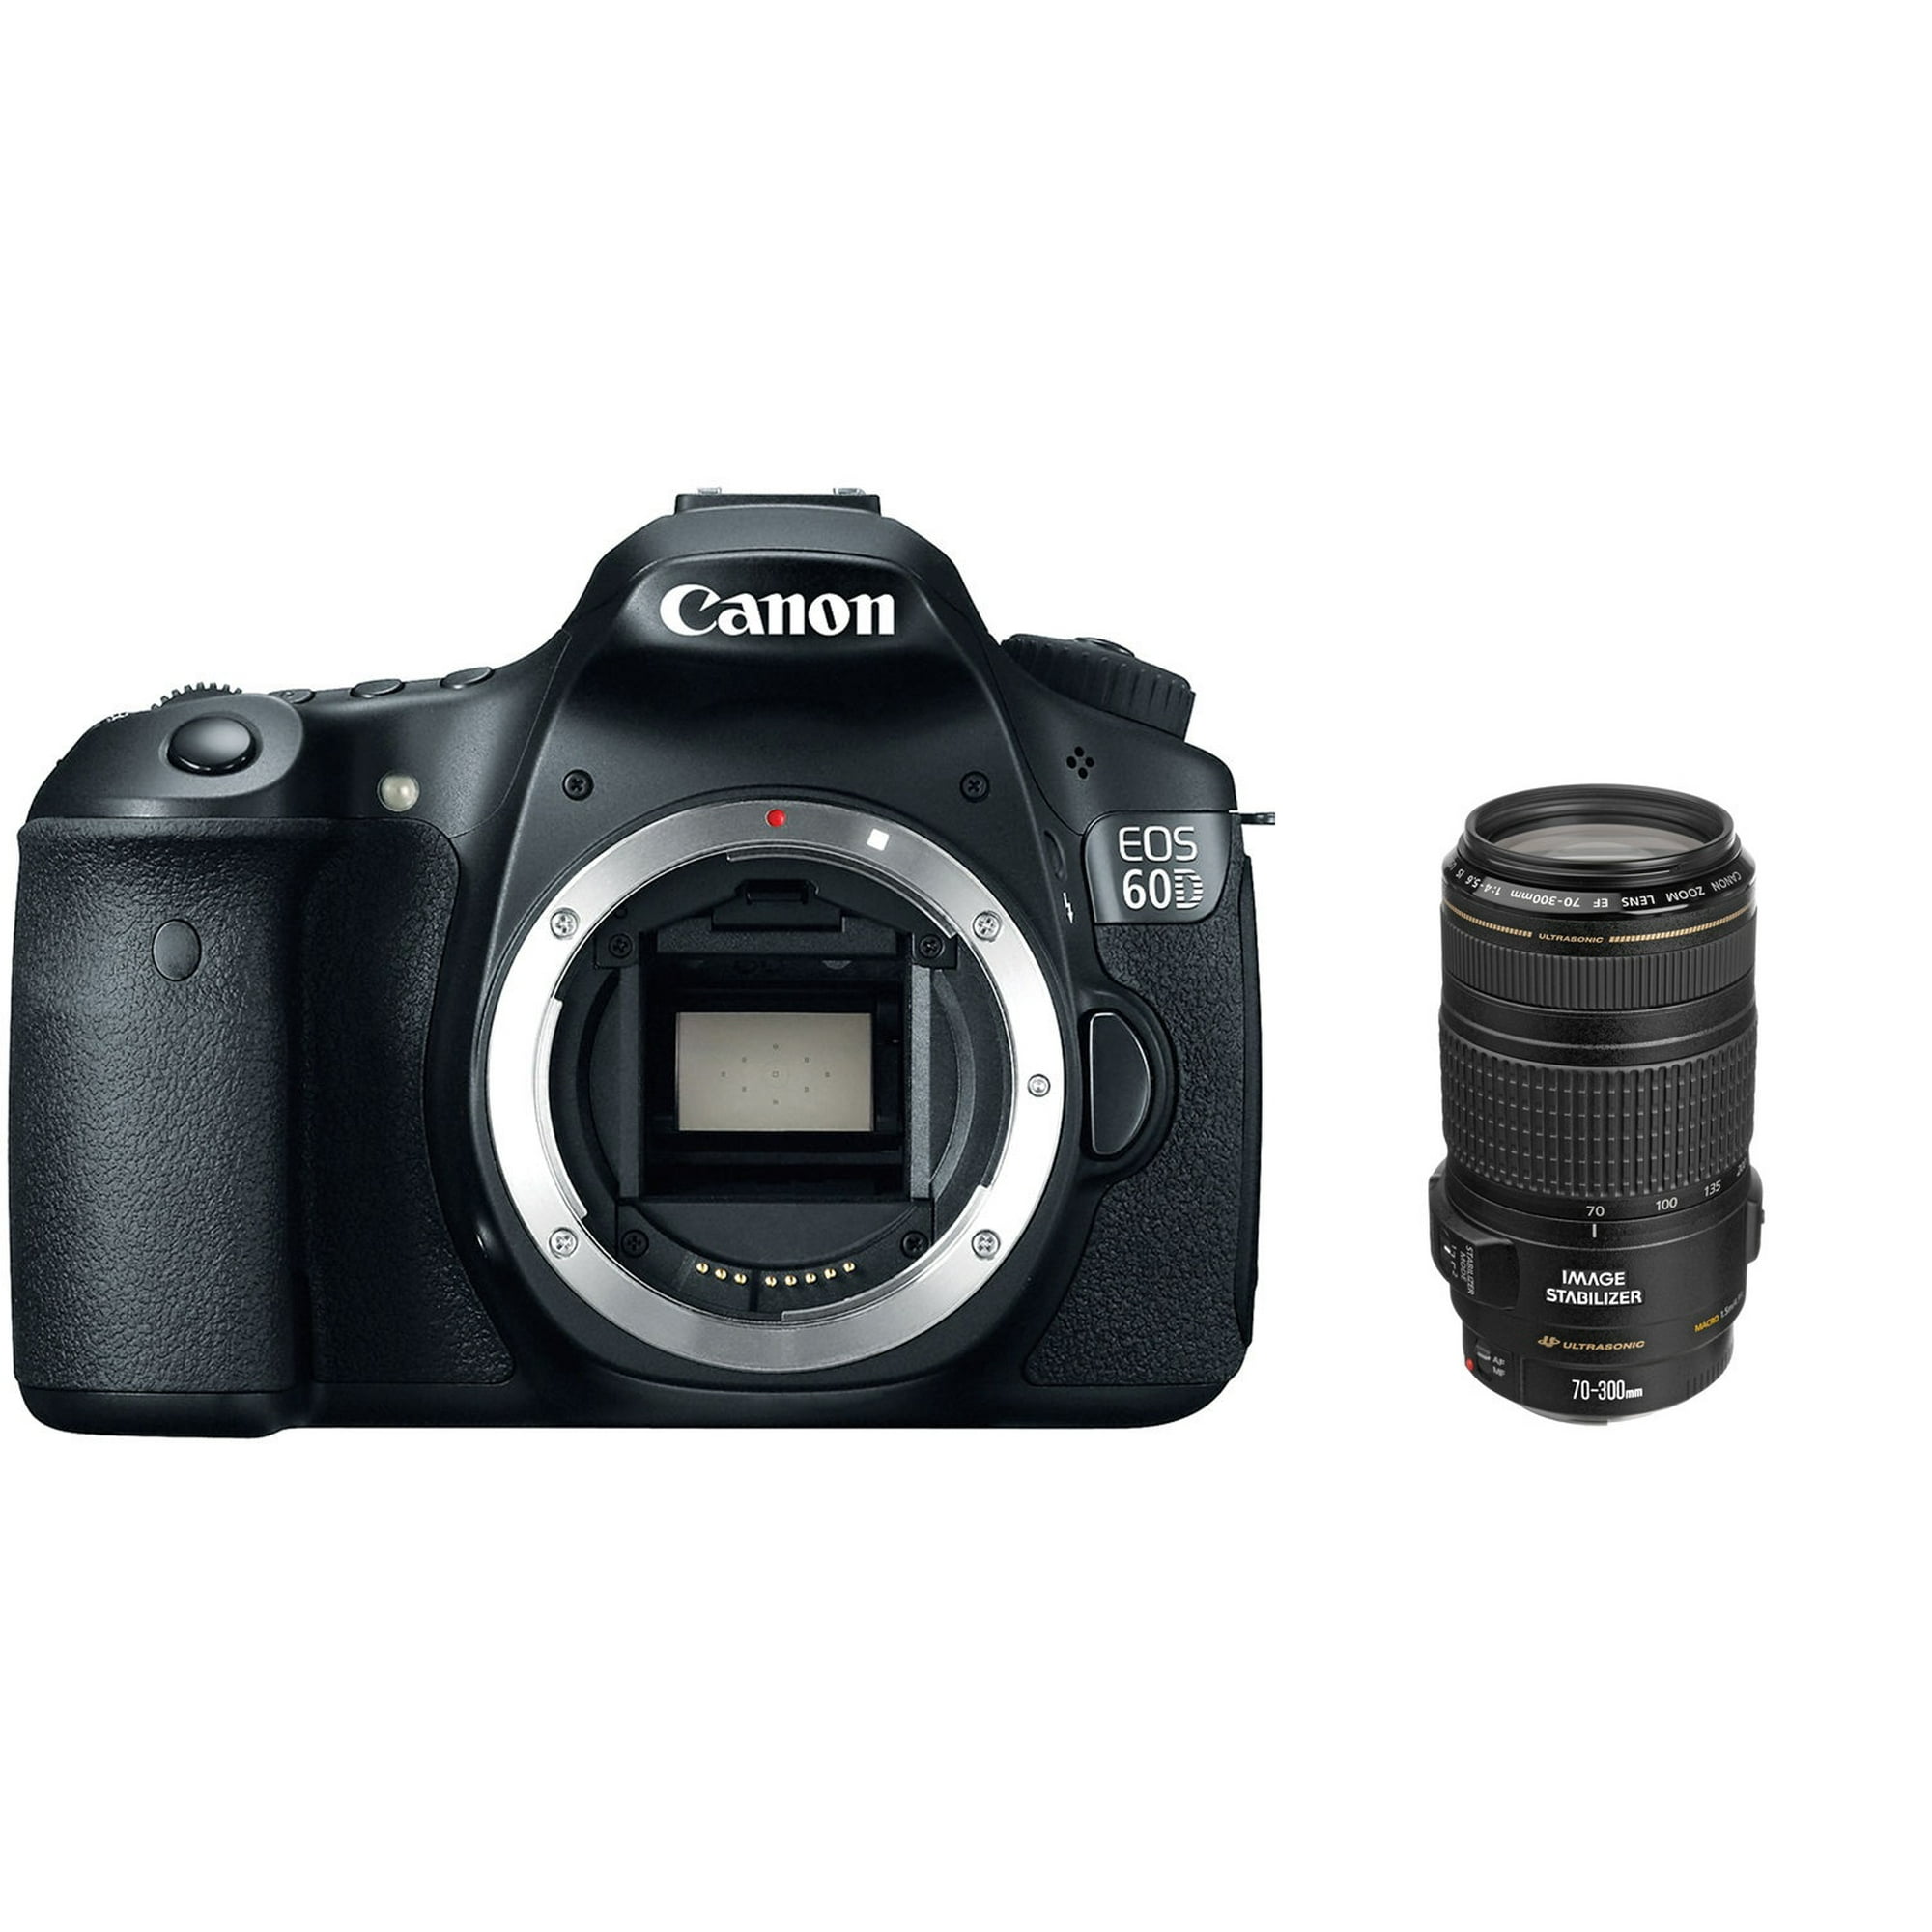 Canon EOS 60D DSLR Camera with 70-300mm Lens Kit - Walmart.com